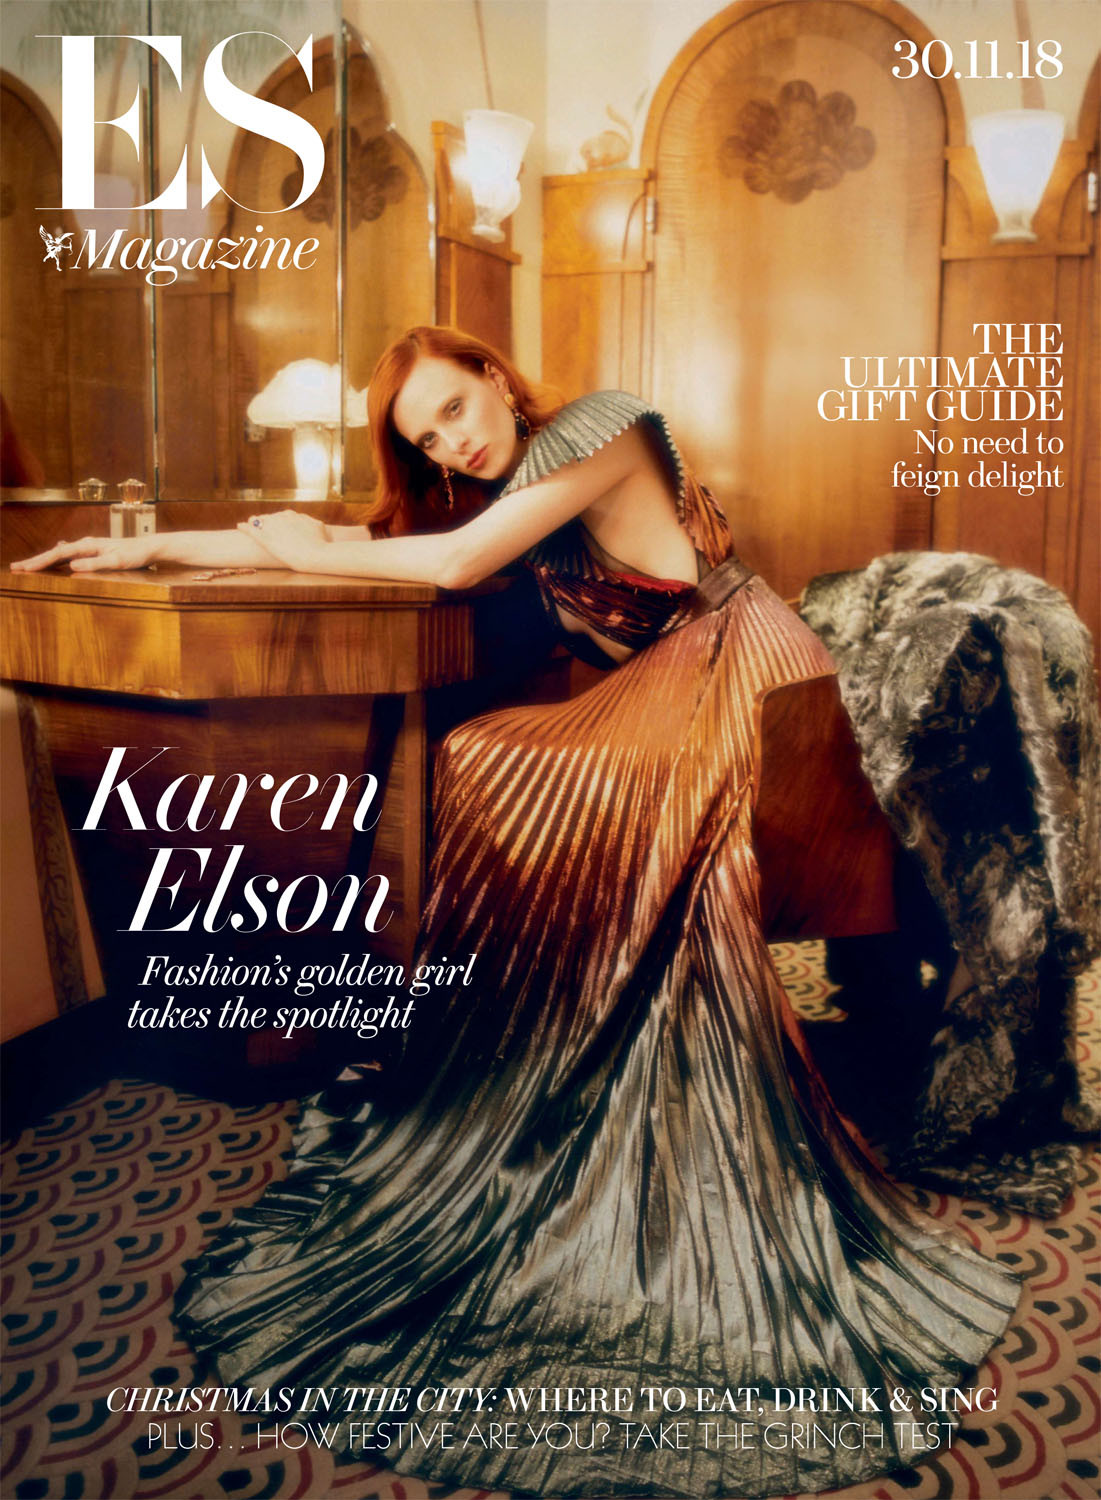 Karen Elson by Tom Craig for ES Magazine Nov 30, 2018 (2).jpg